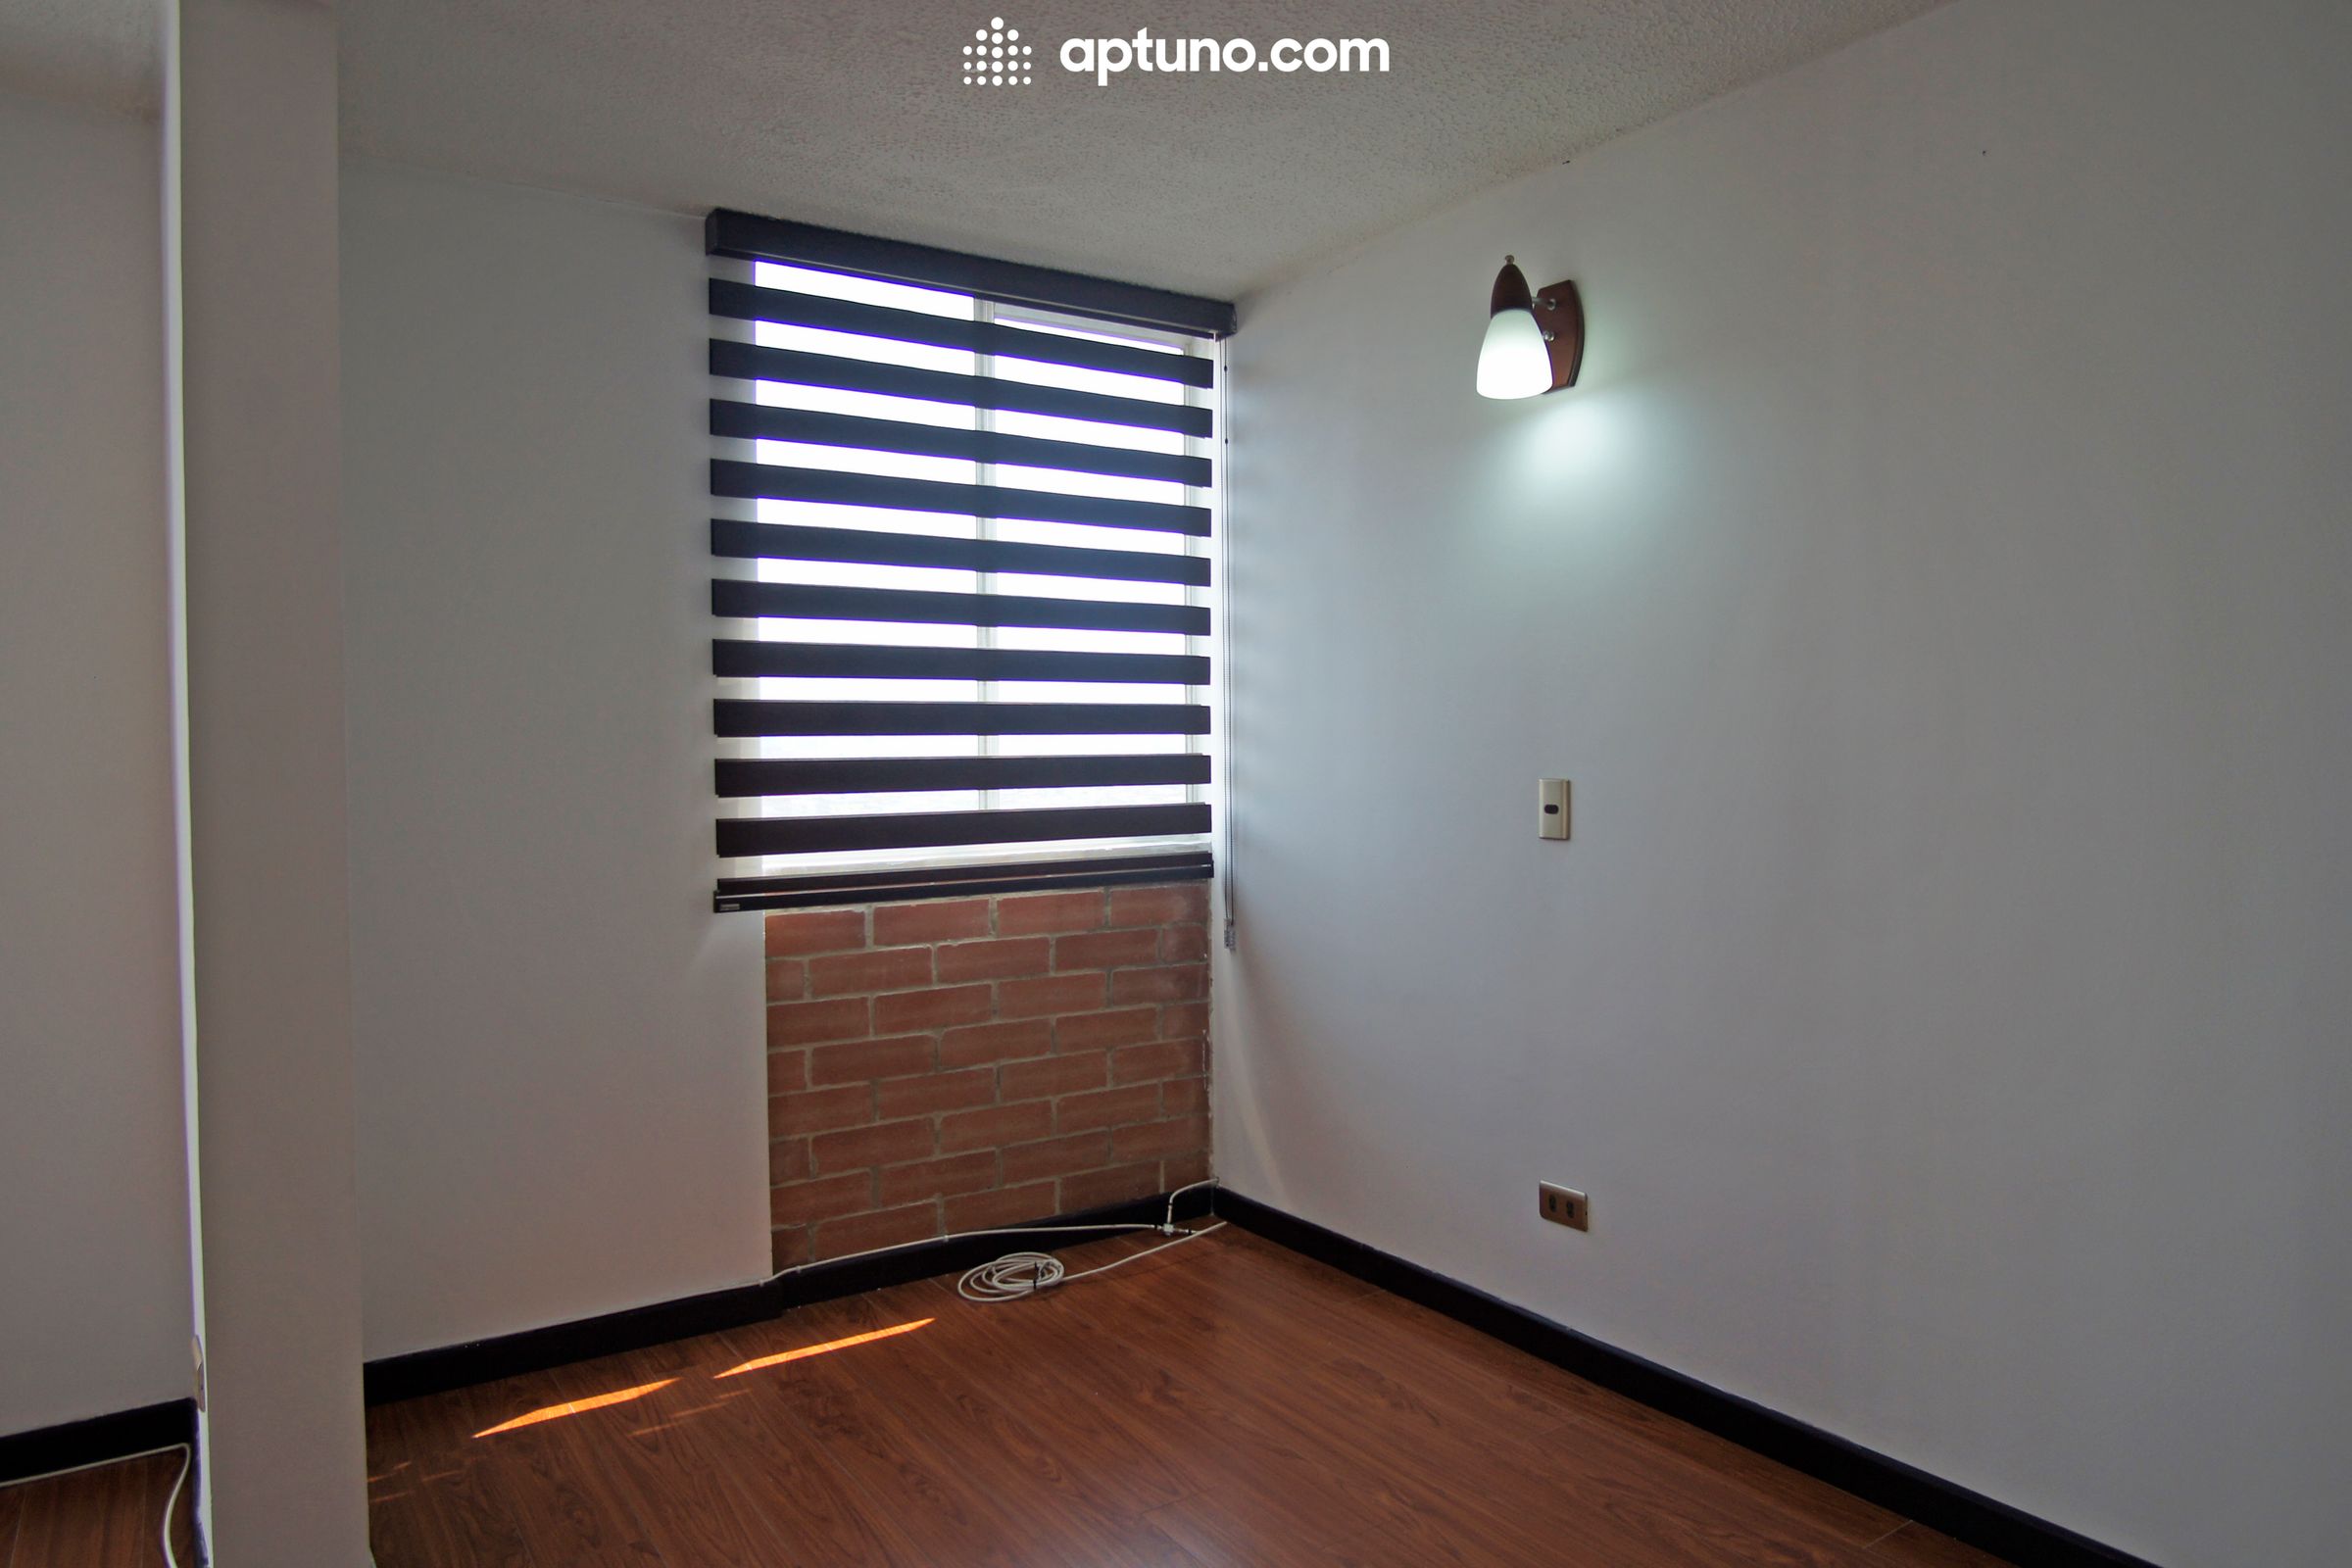 Apartamento en arriendo La Paz Bosa 50 m² - $ 900.000,00